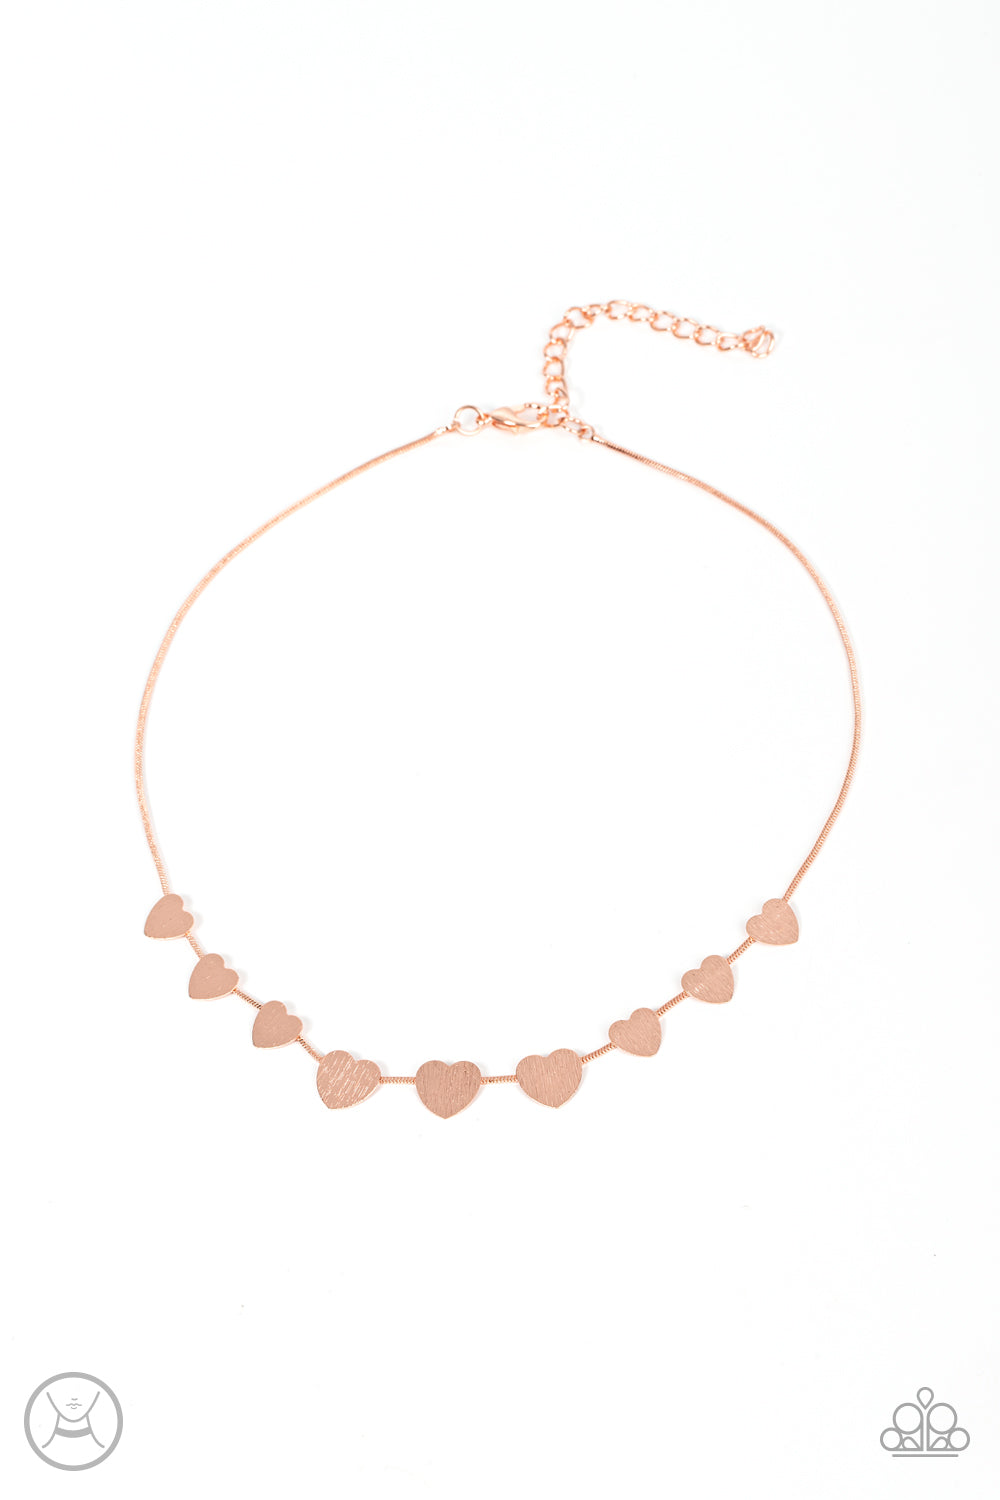 Dainty Desire - Copper (Heart) Necklace freeshipping - JewLz4u Gemstone Gallery